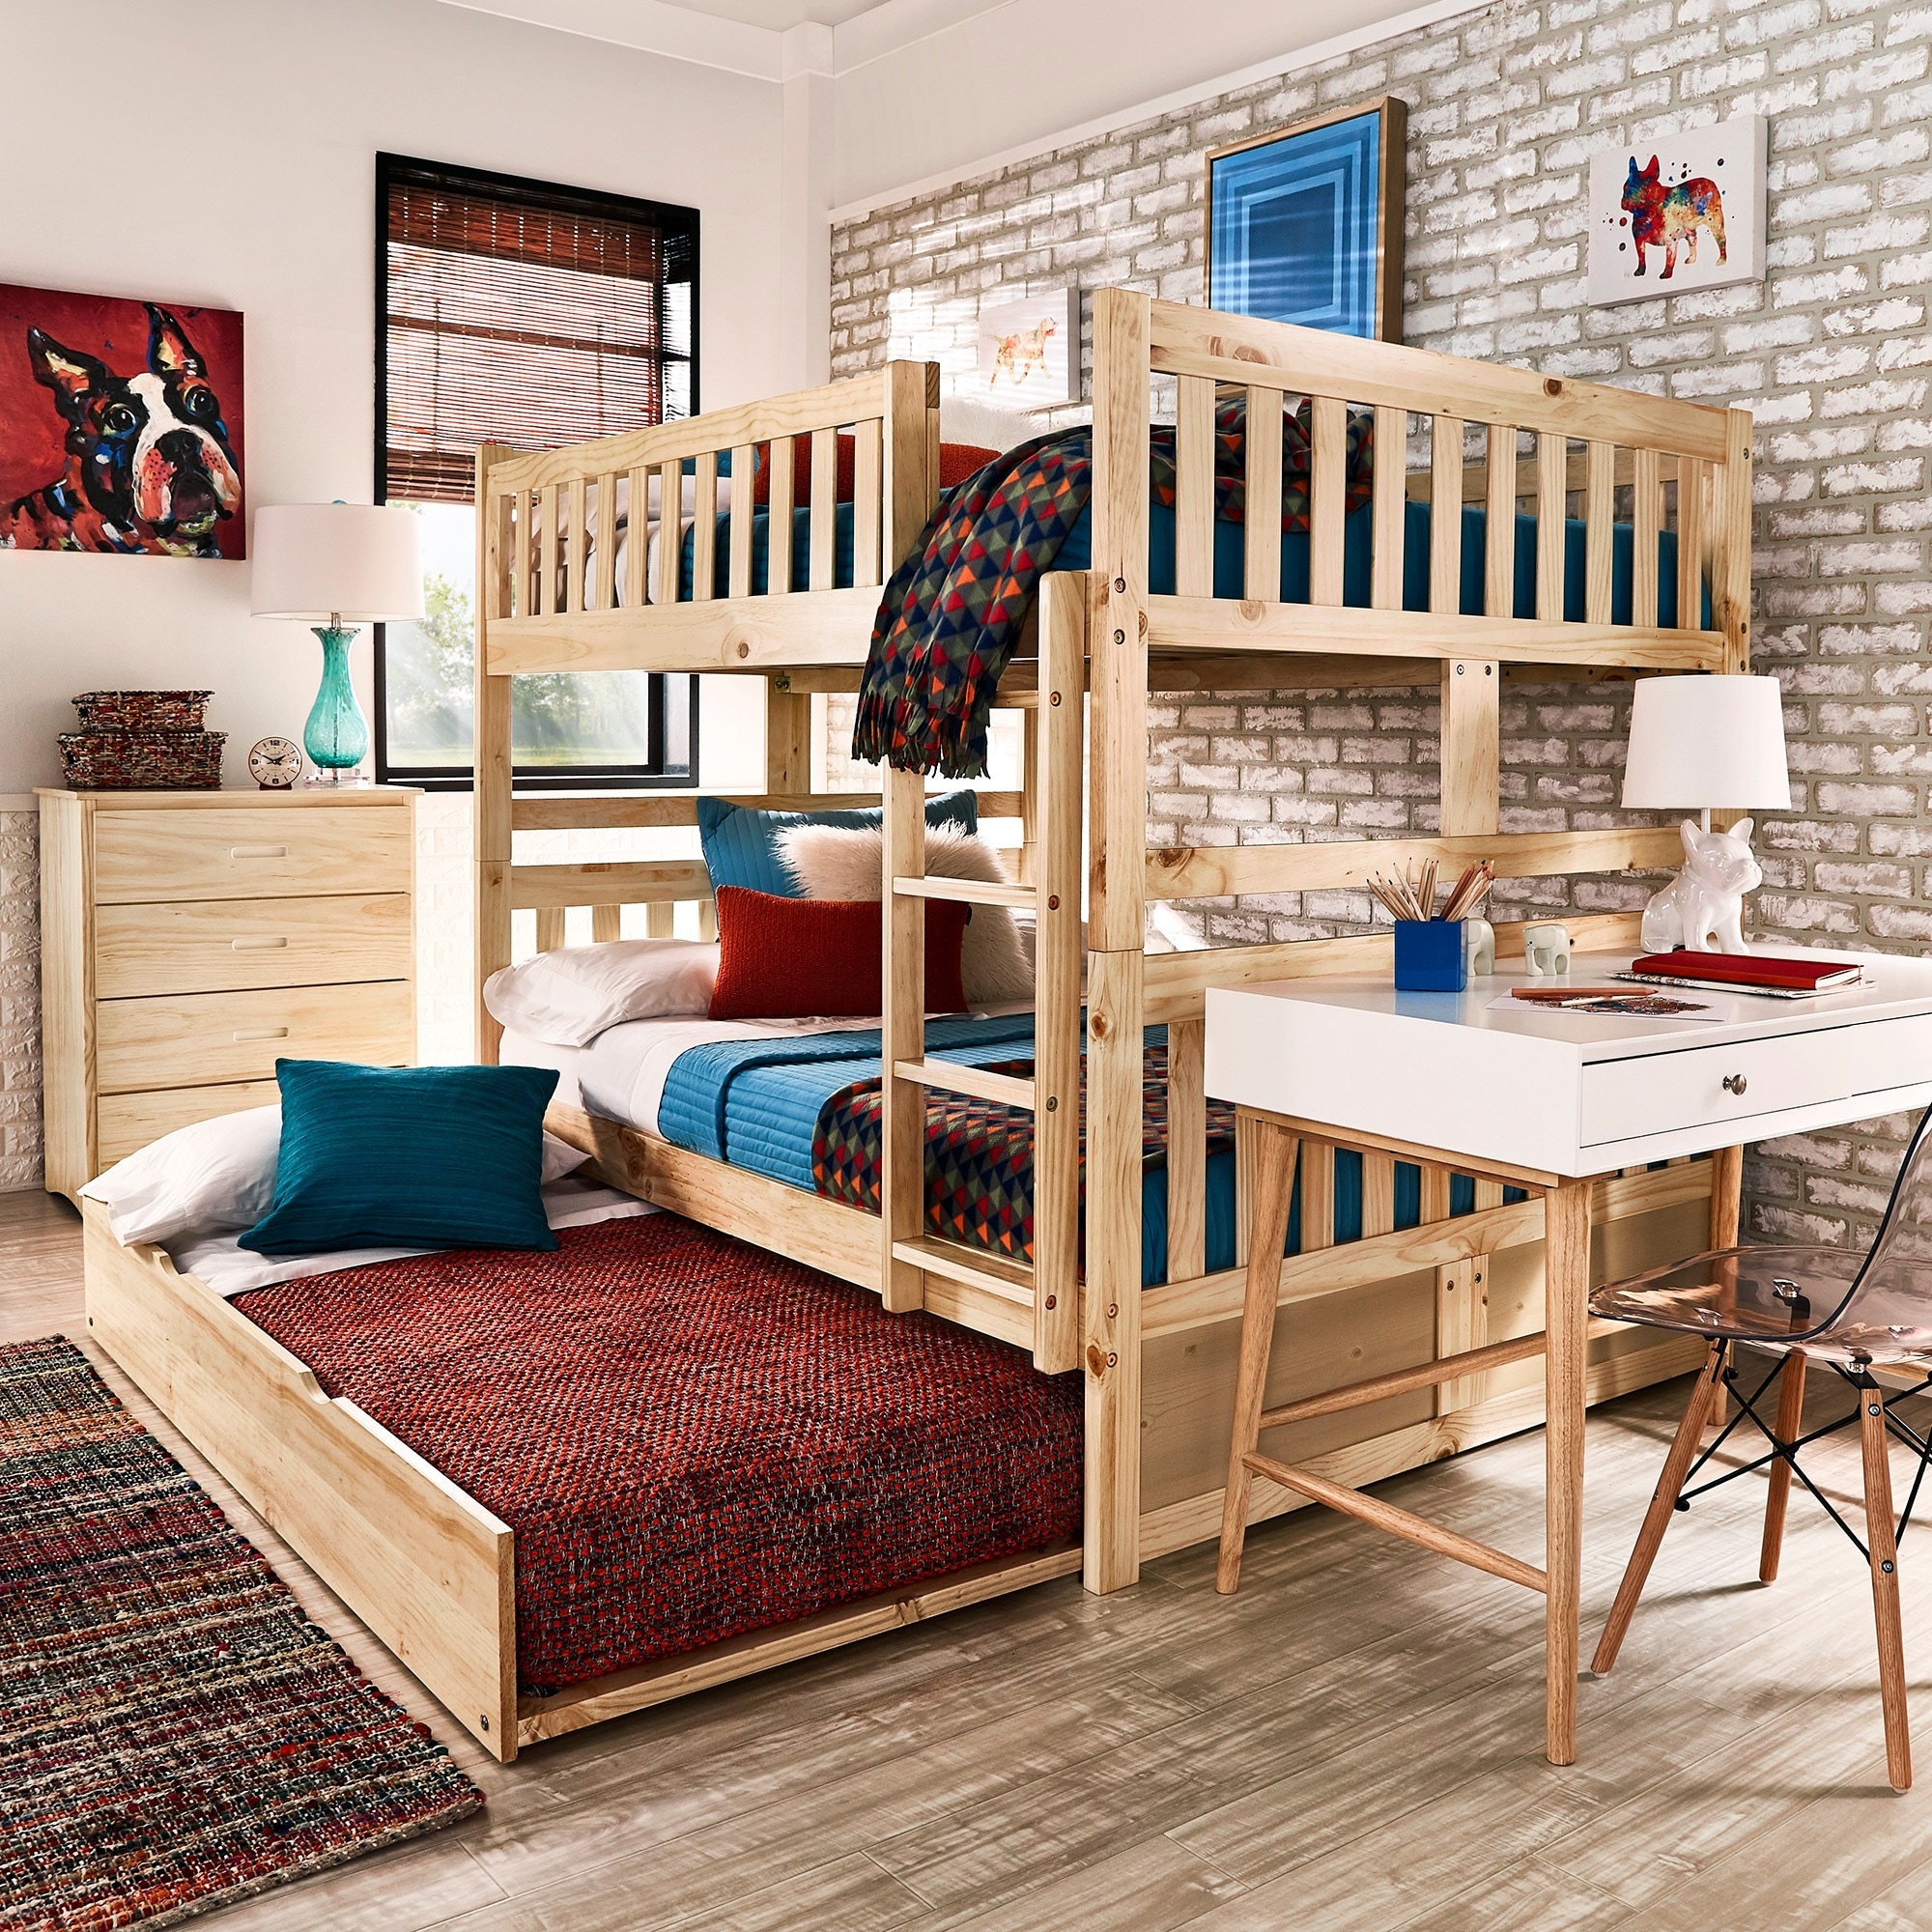 futon bunk bed wood